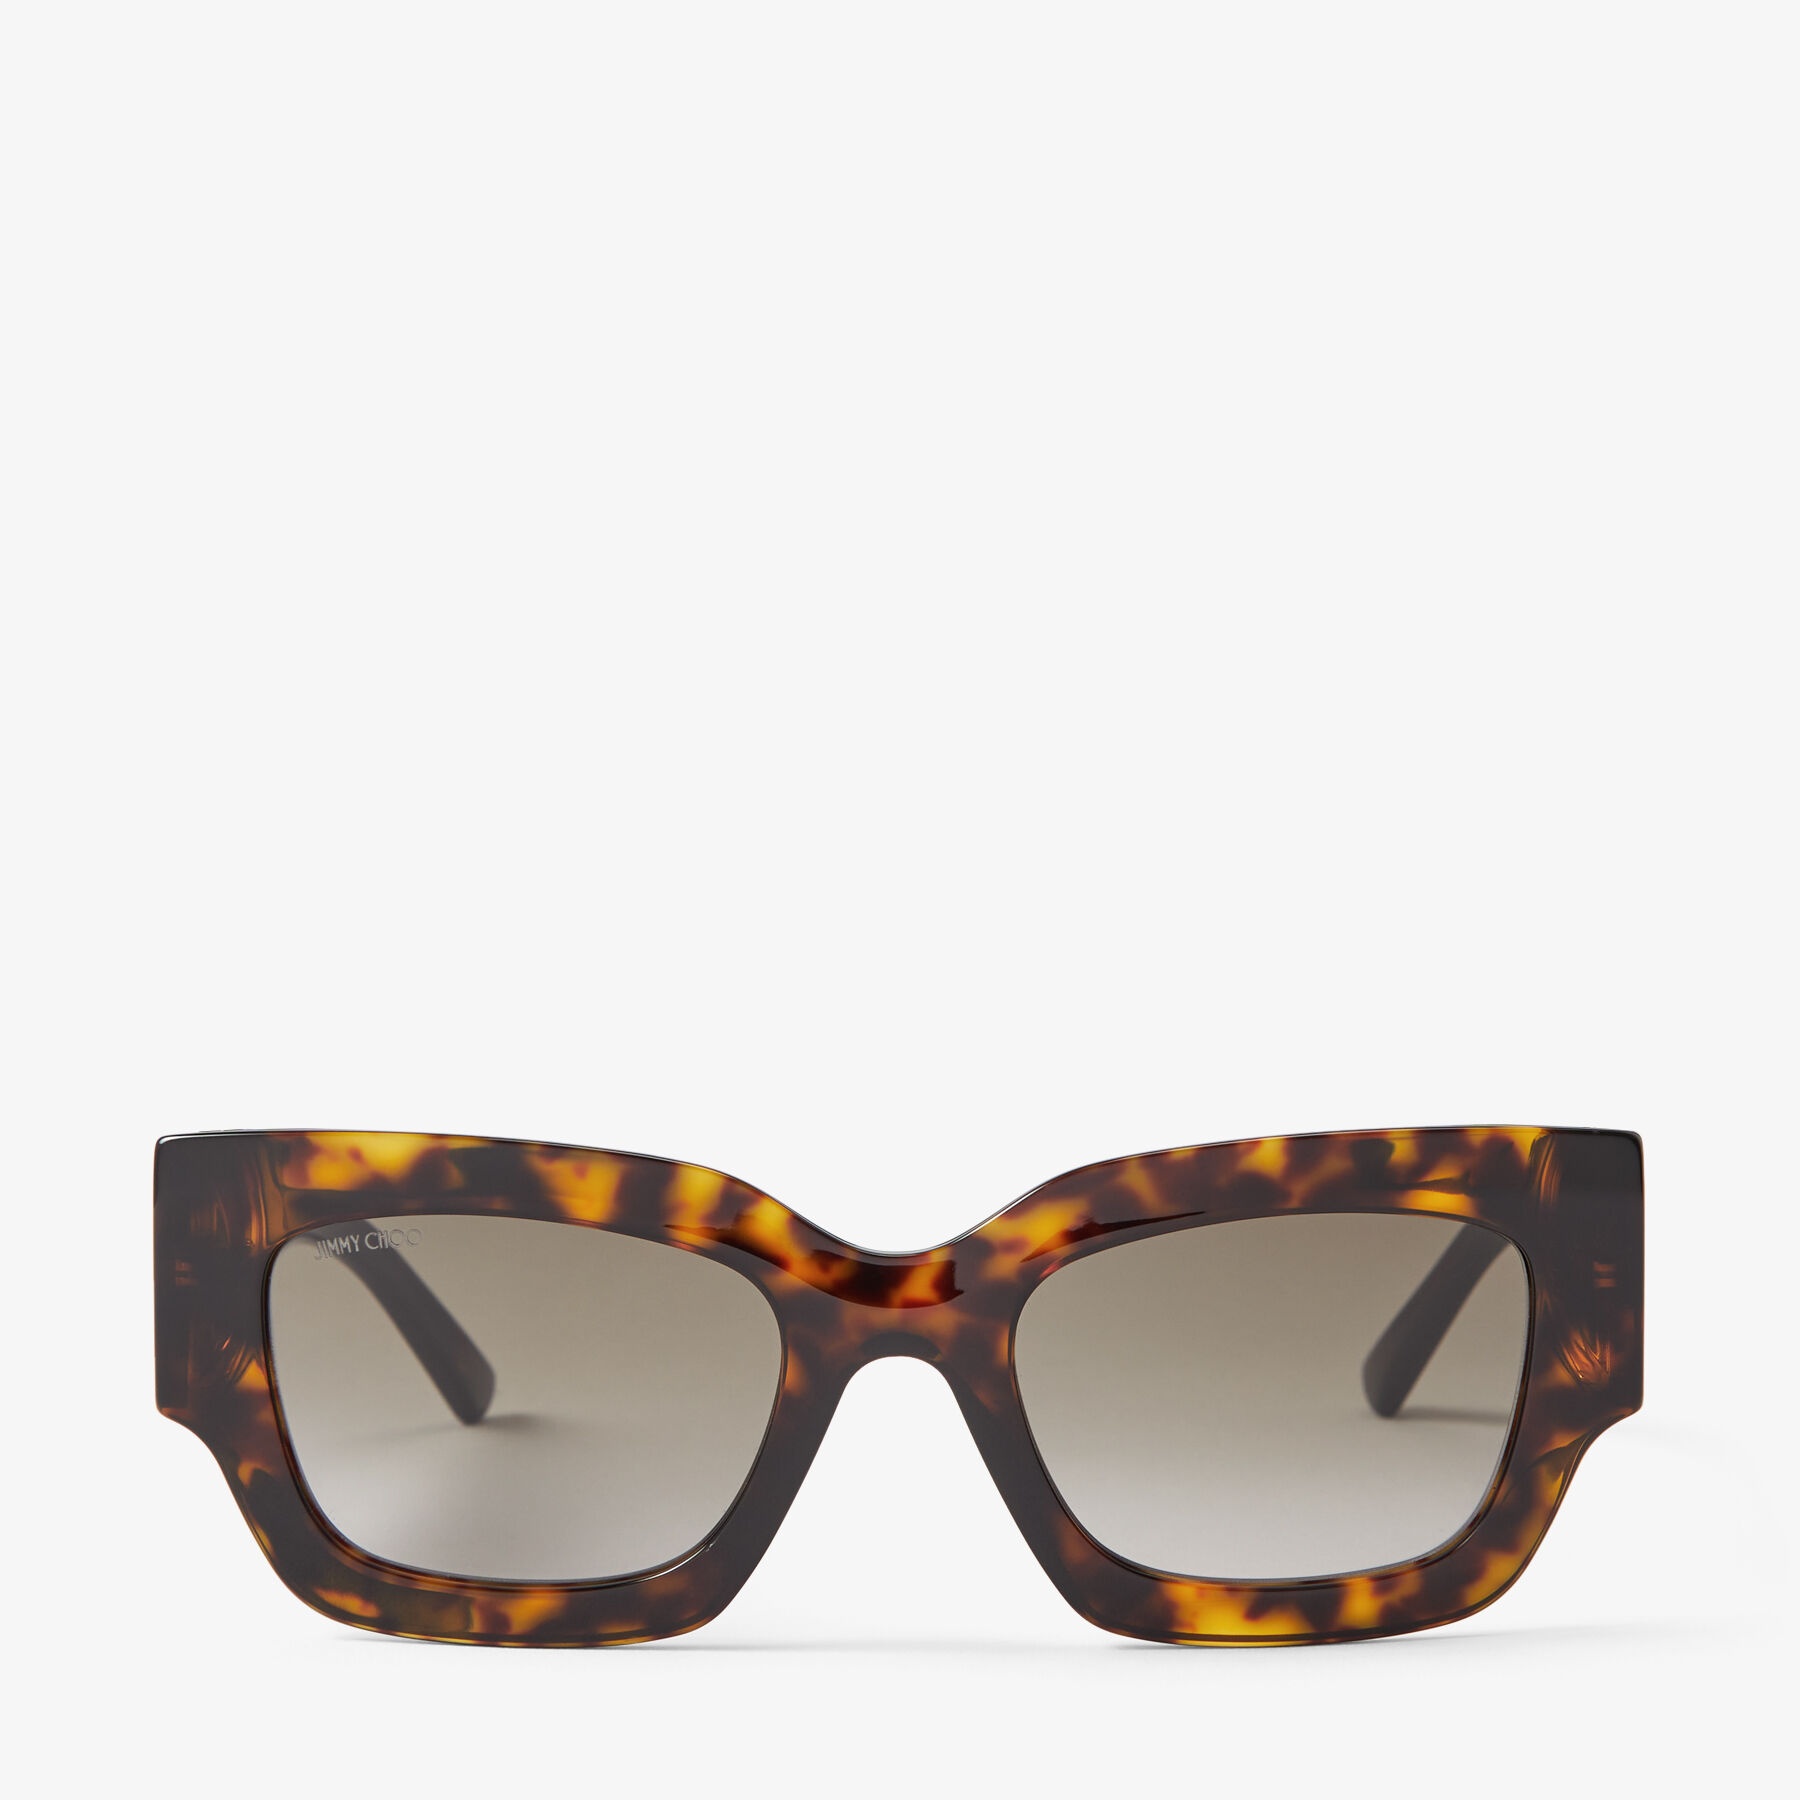 Nena
Brown Havana Square Frame Sunglasses with JC Emblem - 1